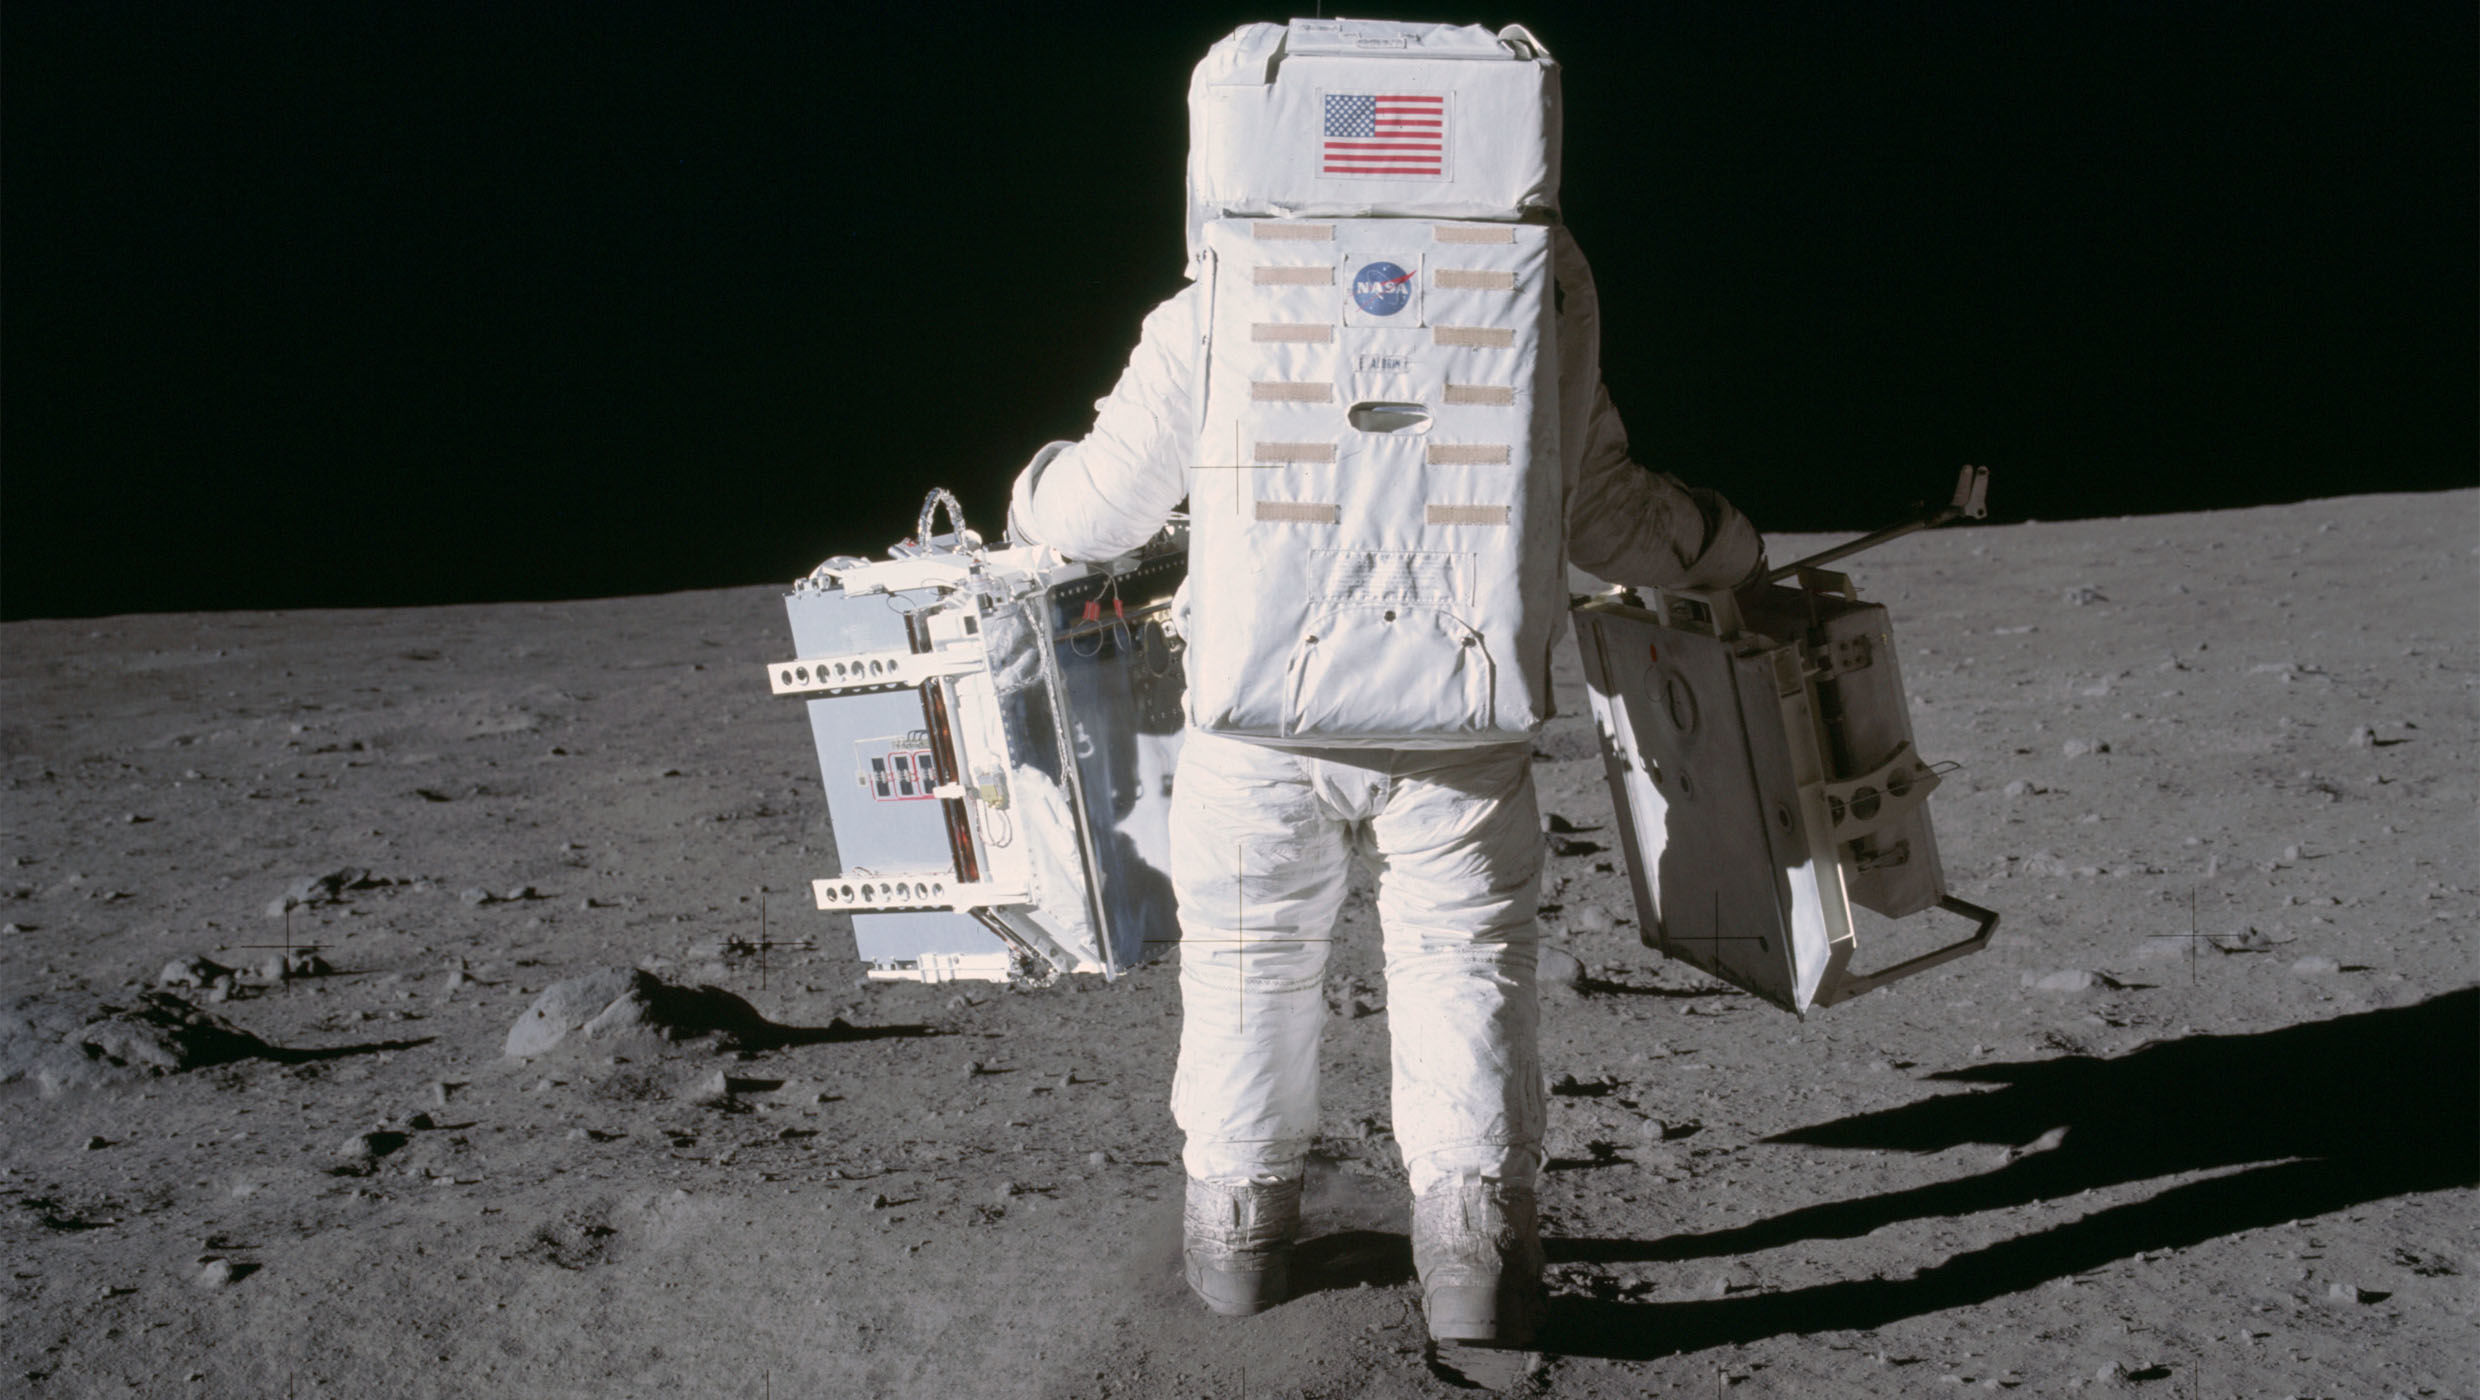 First land on the moon. Аполлон 11 1969. Скафандр Аполлон 11. Астронавты Аполлон 11.